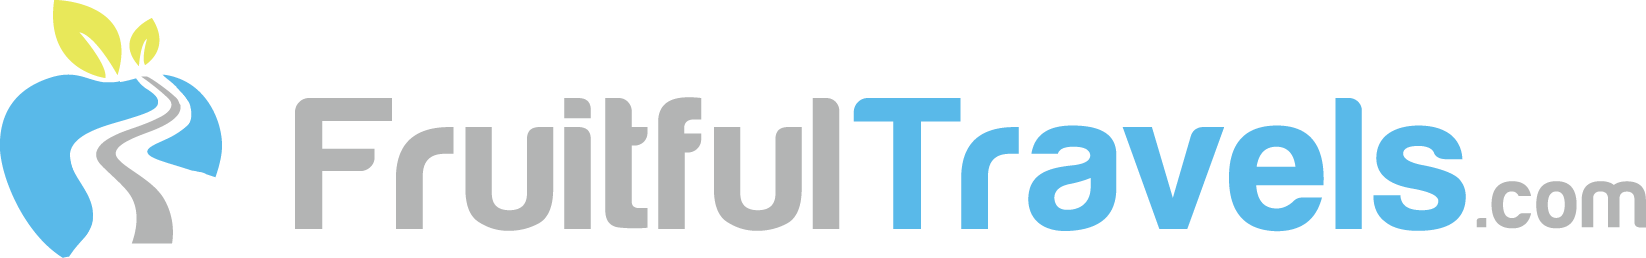 FruitfulTravels.com Logo